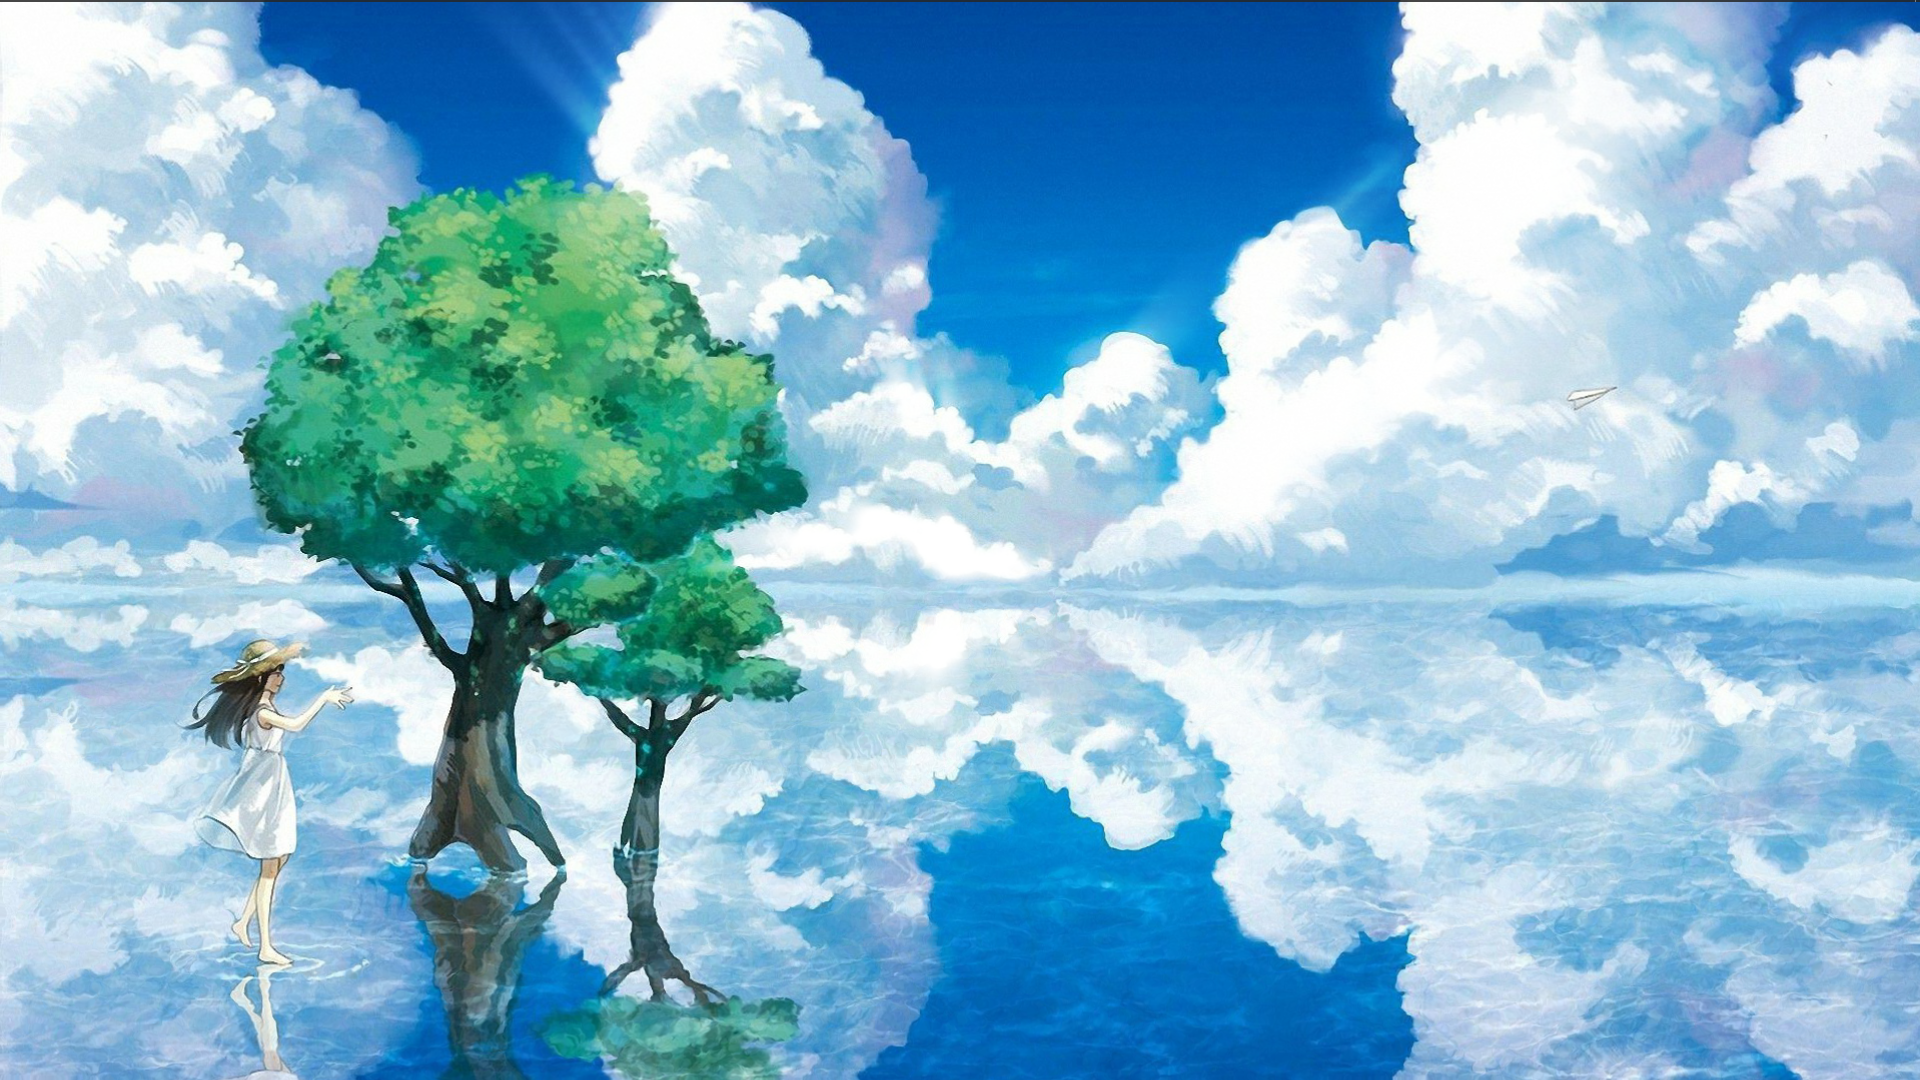 HD desktop wallpaper Anime Water Sky Reflection Cloud Skirt  Original Telephone Pole download free picture 870484